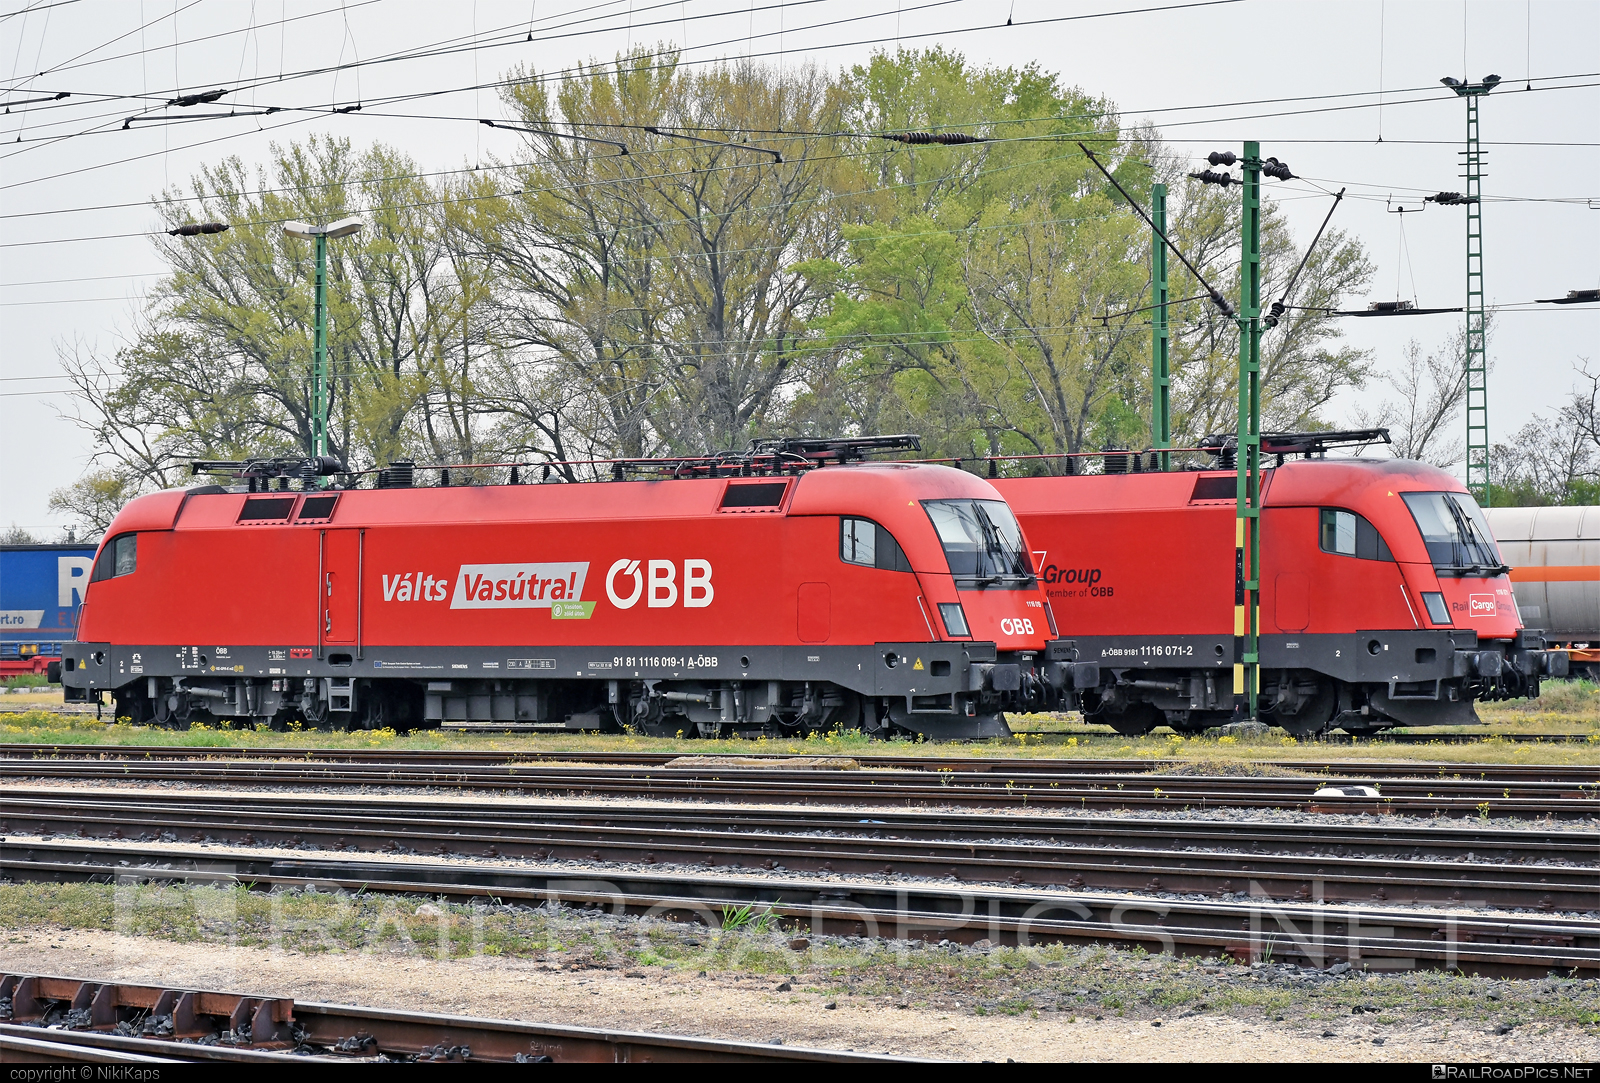 Siemens ES 64 U2 - 1116 019 operated by Rail Cargo Hungaria ZRt. #es64 #es64u2 #eurosprinter #obb #osterreichischebundesbahnen #rch #siemens #siemensEs64 #siemensEs64u2 #siemenstaurus #taurus #tauruslocomotive